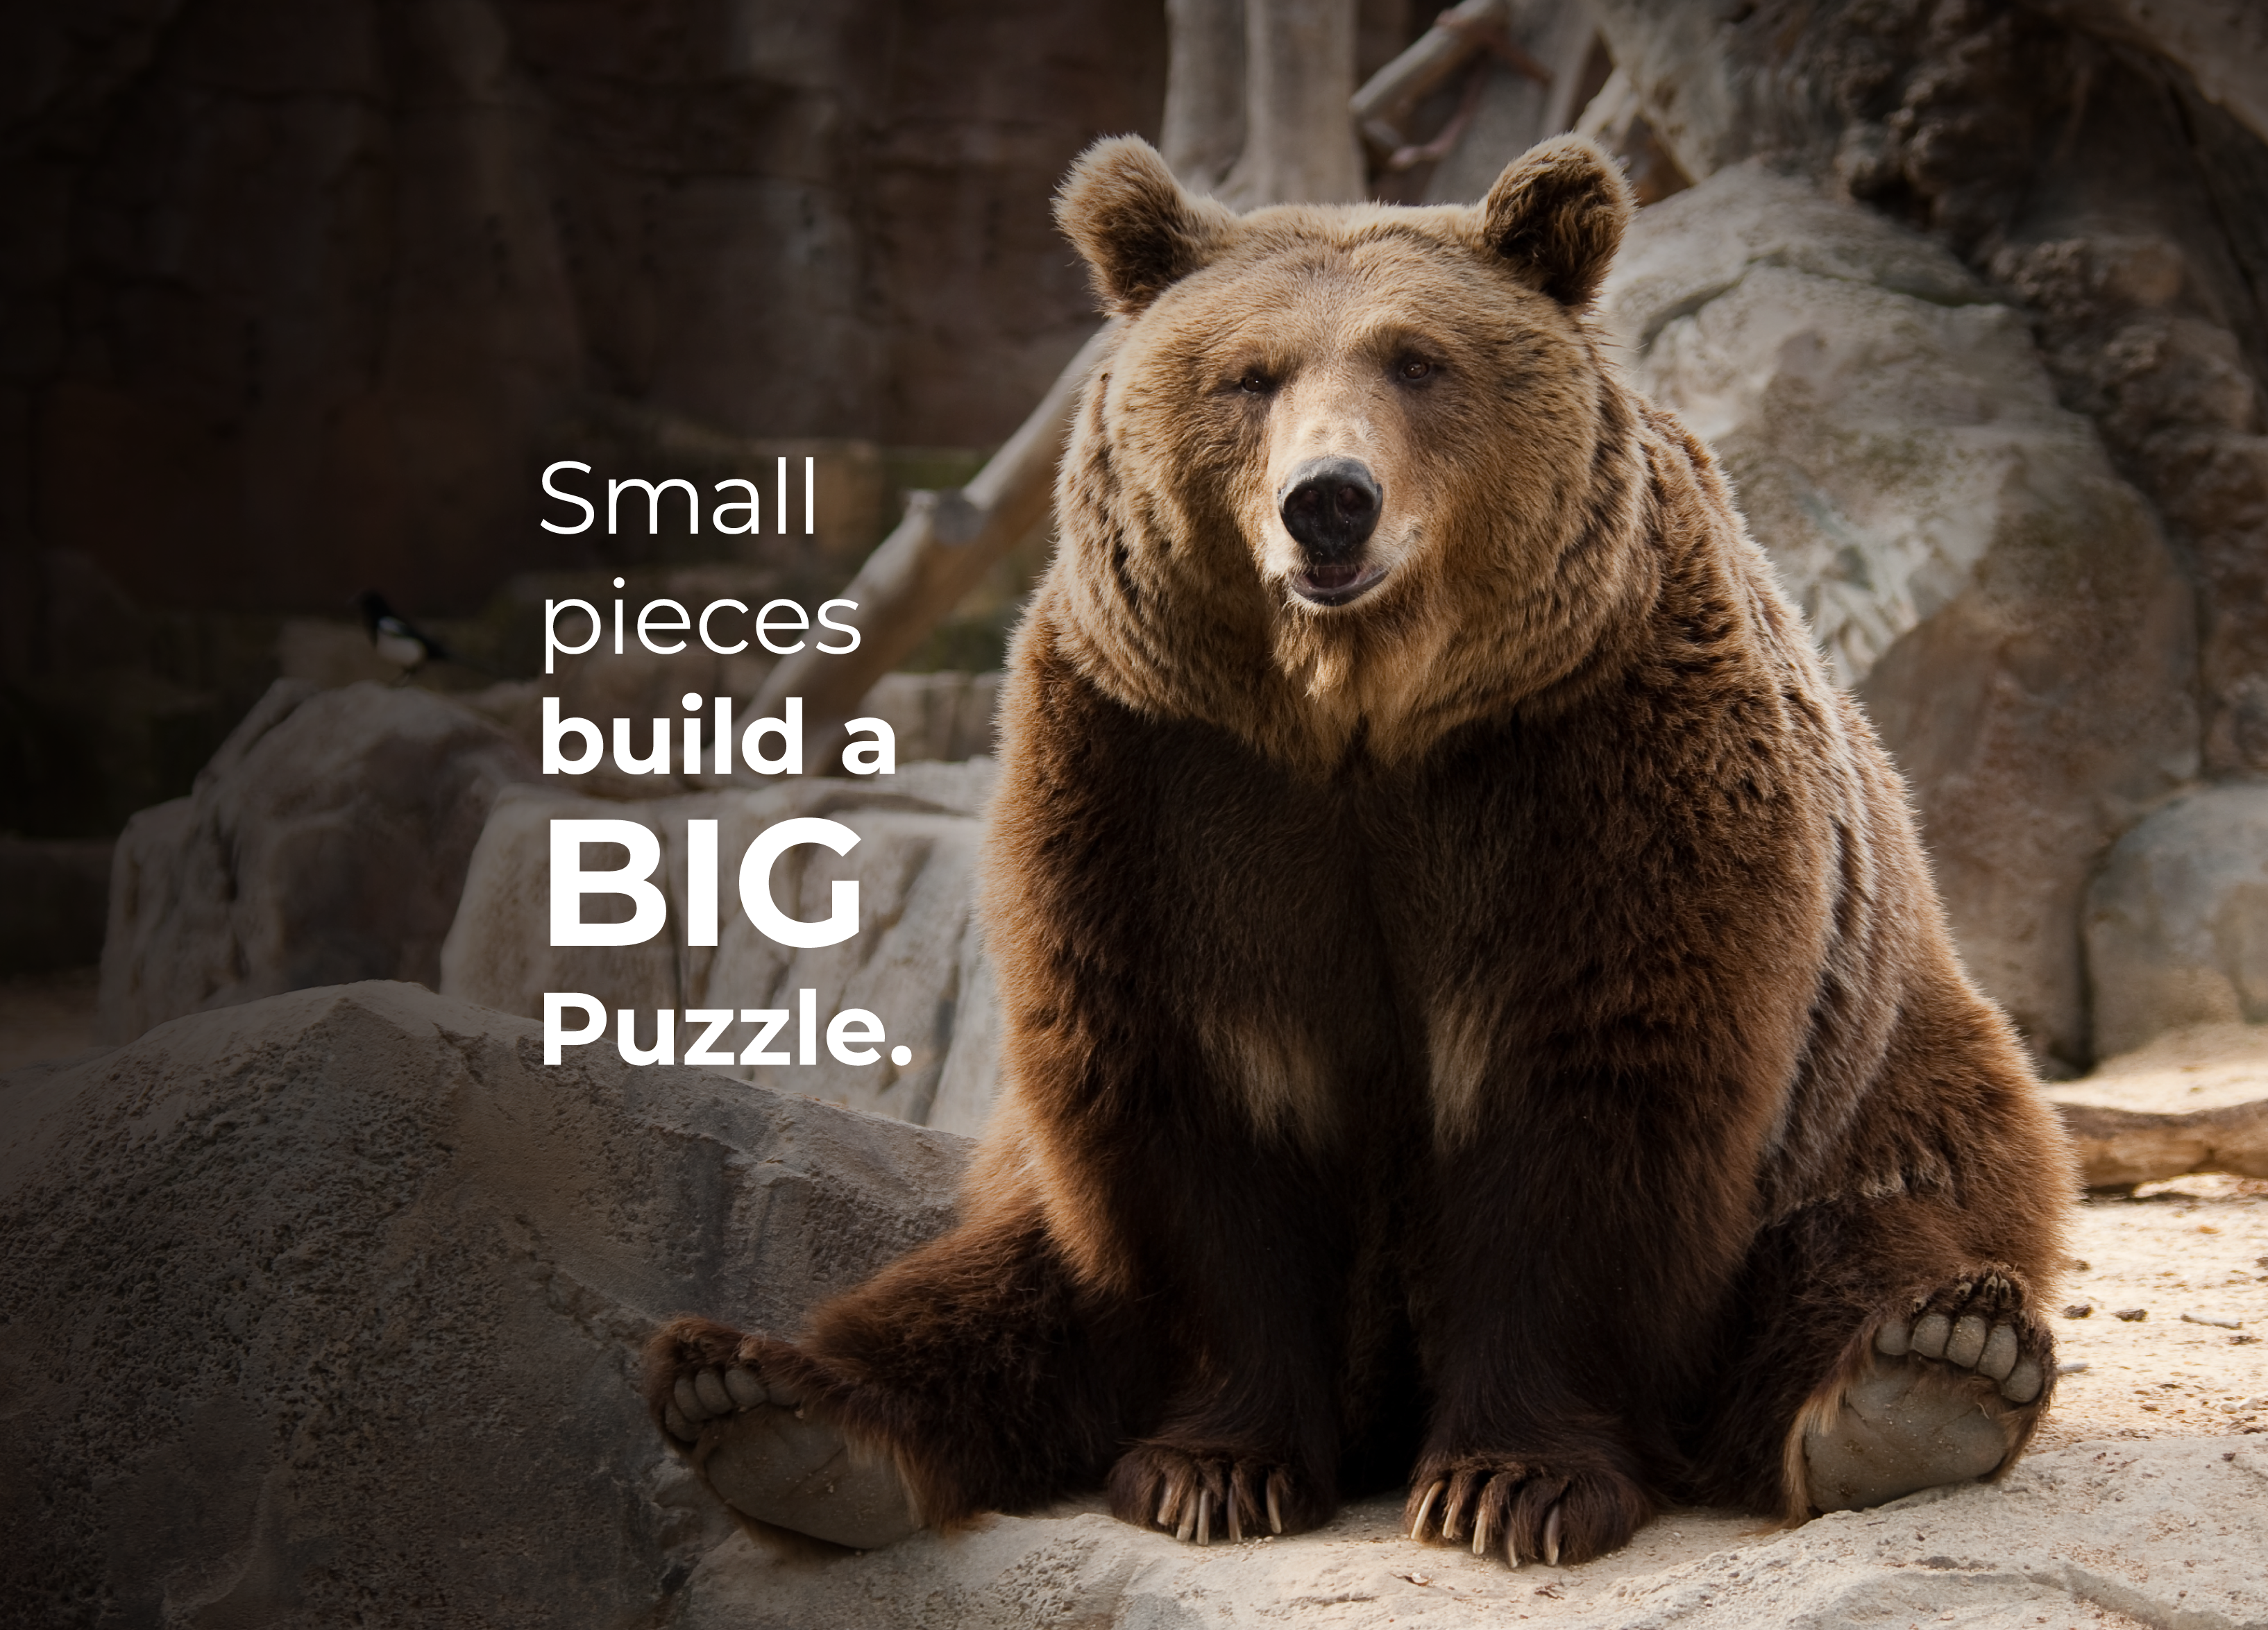 Small pieces build a BIG Puzzle.